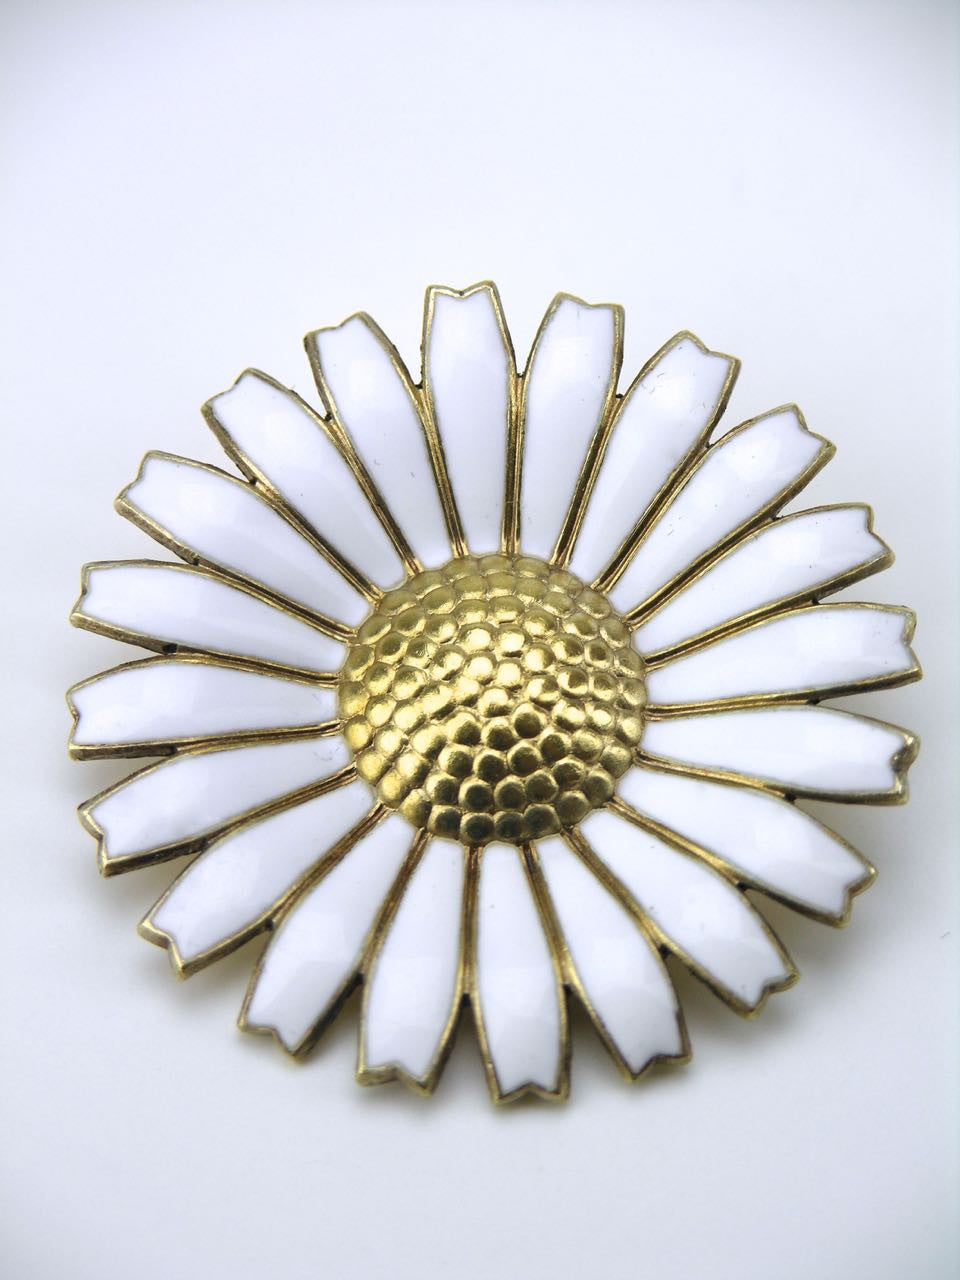 Anton Michelsen silver and enamel daisy brooch